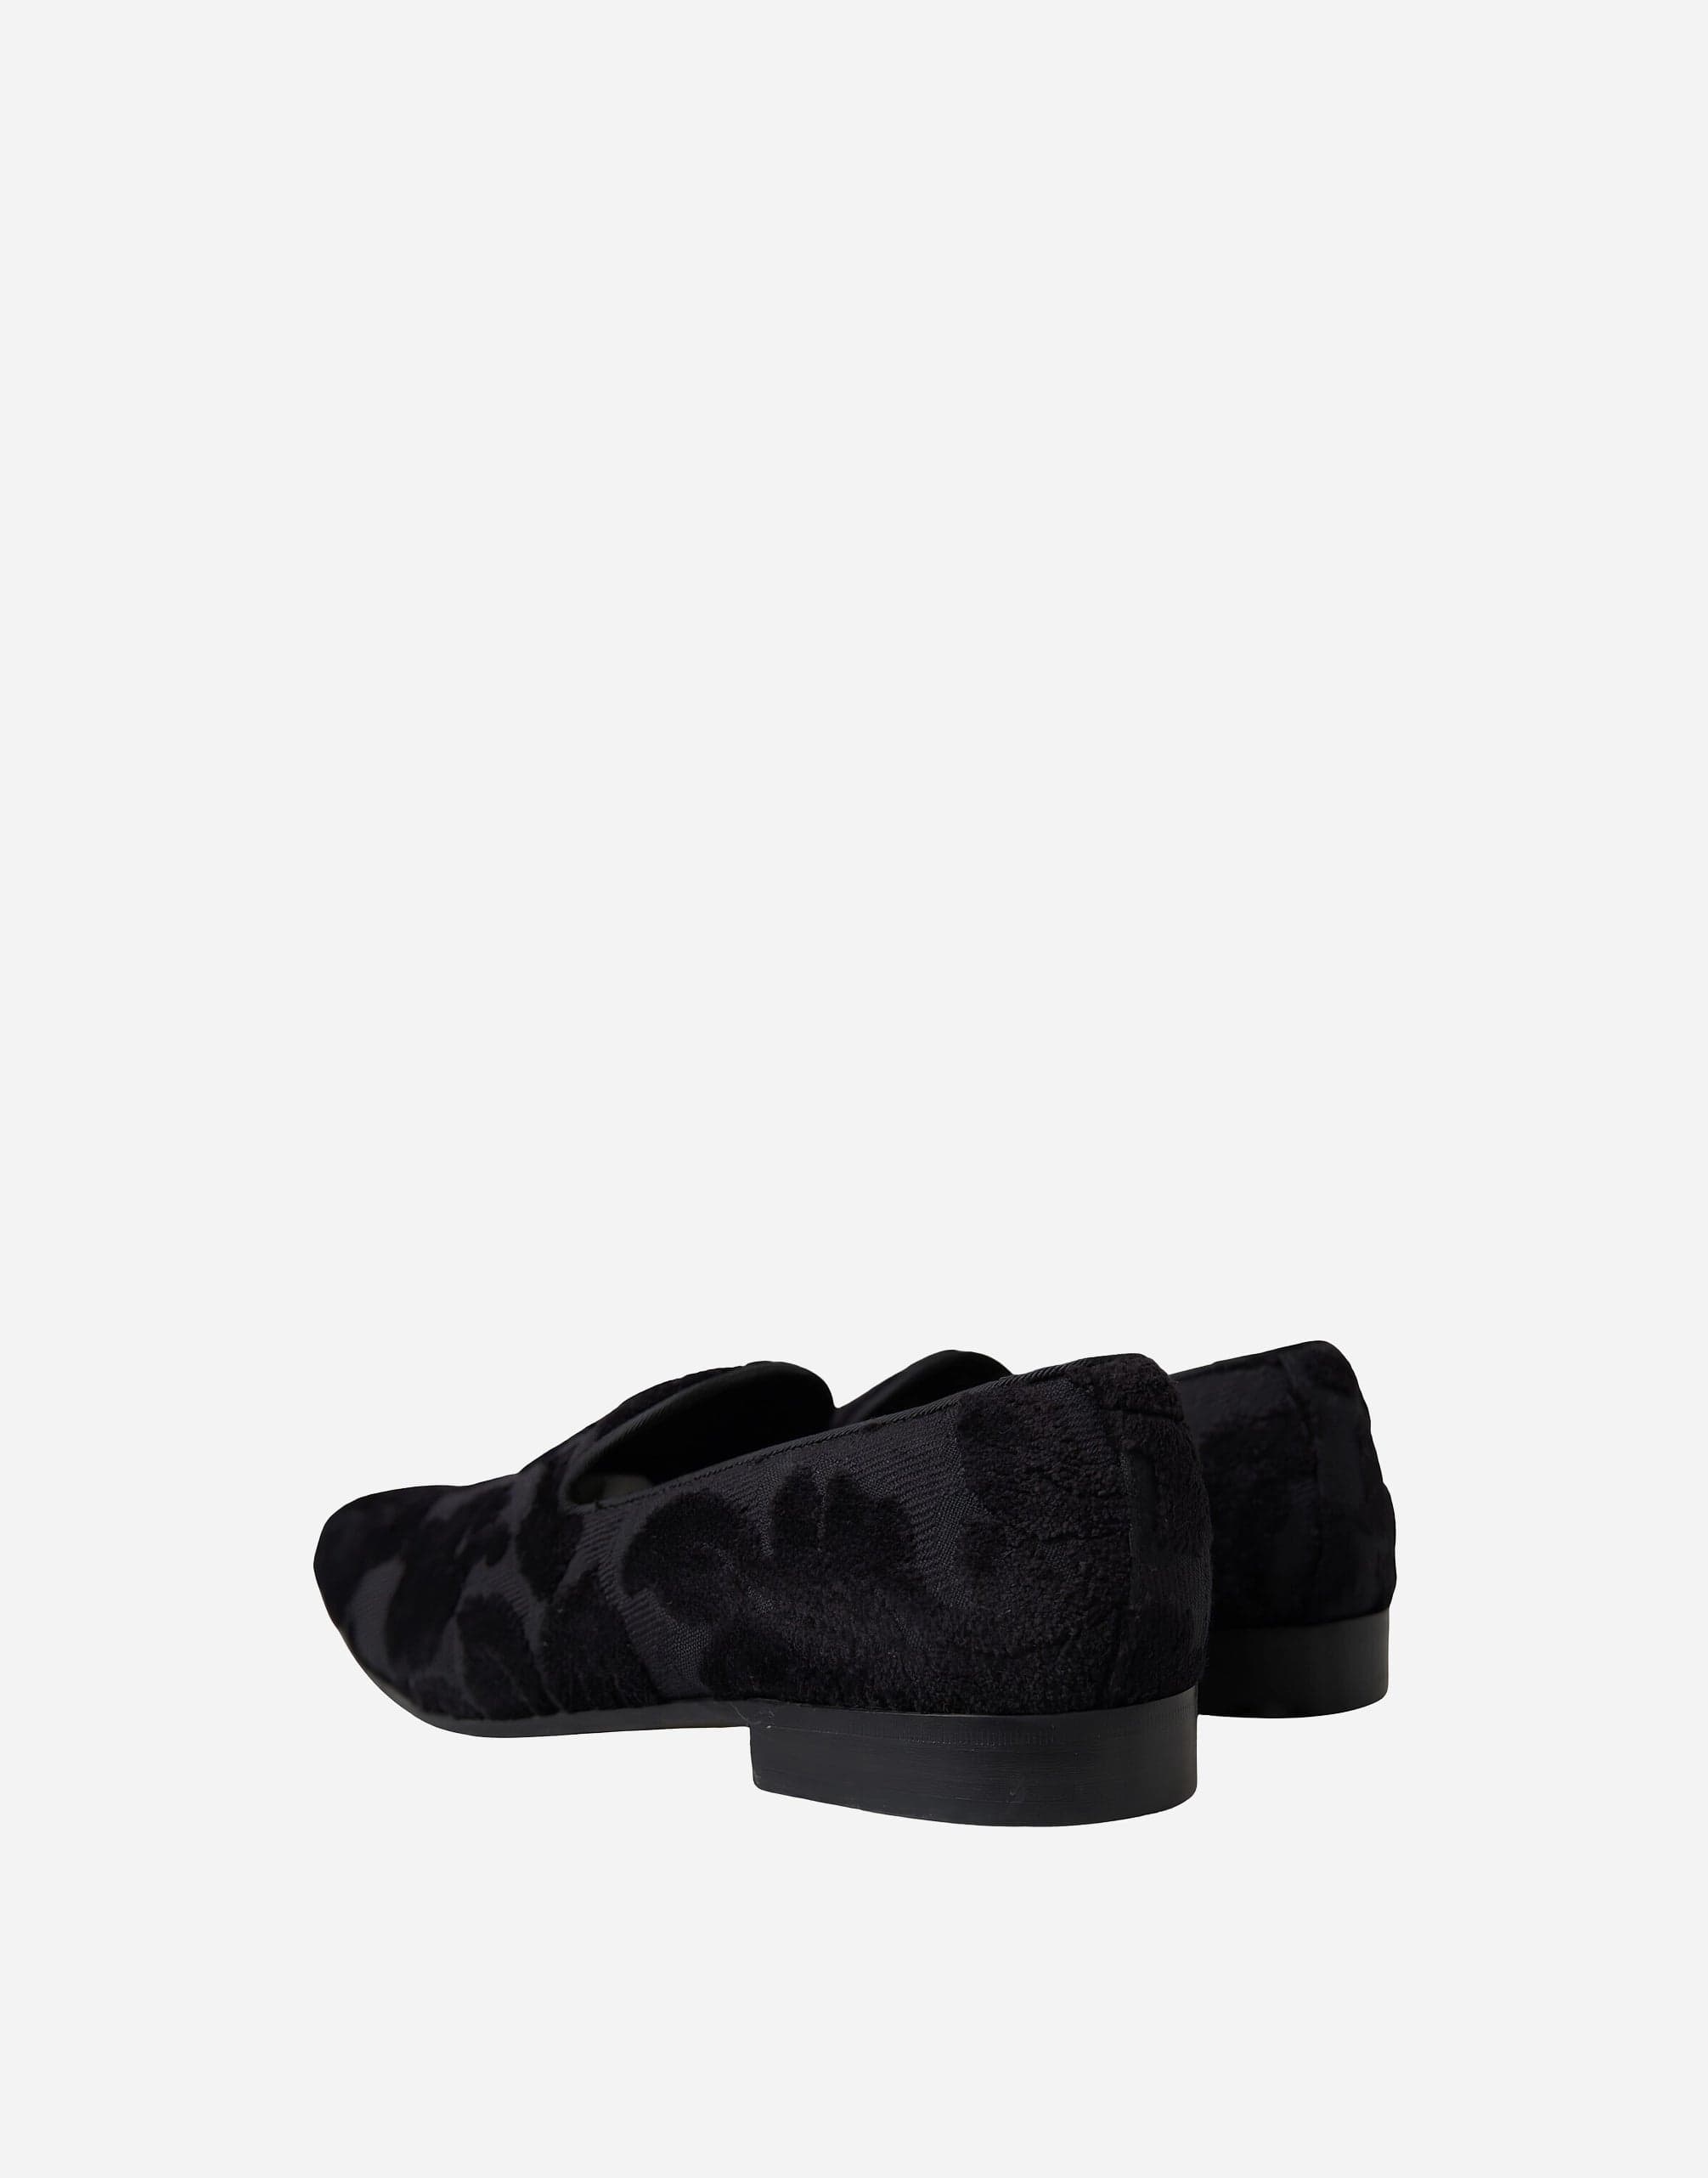 Dolce & Gabbana Brocade Loafers